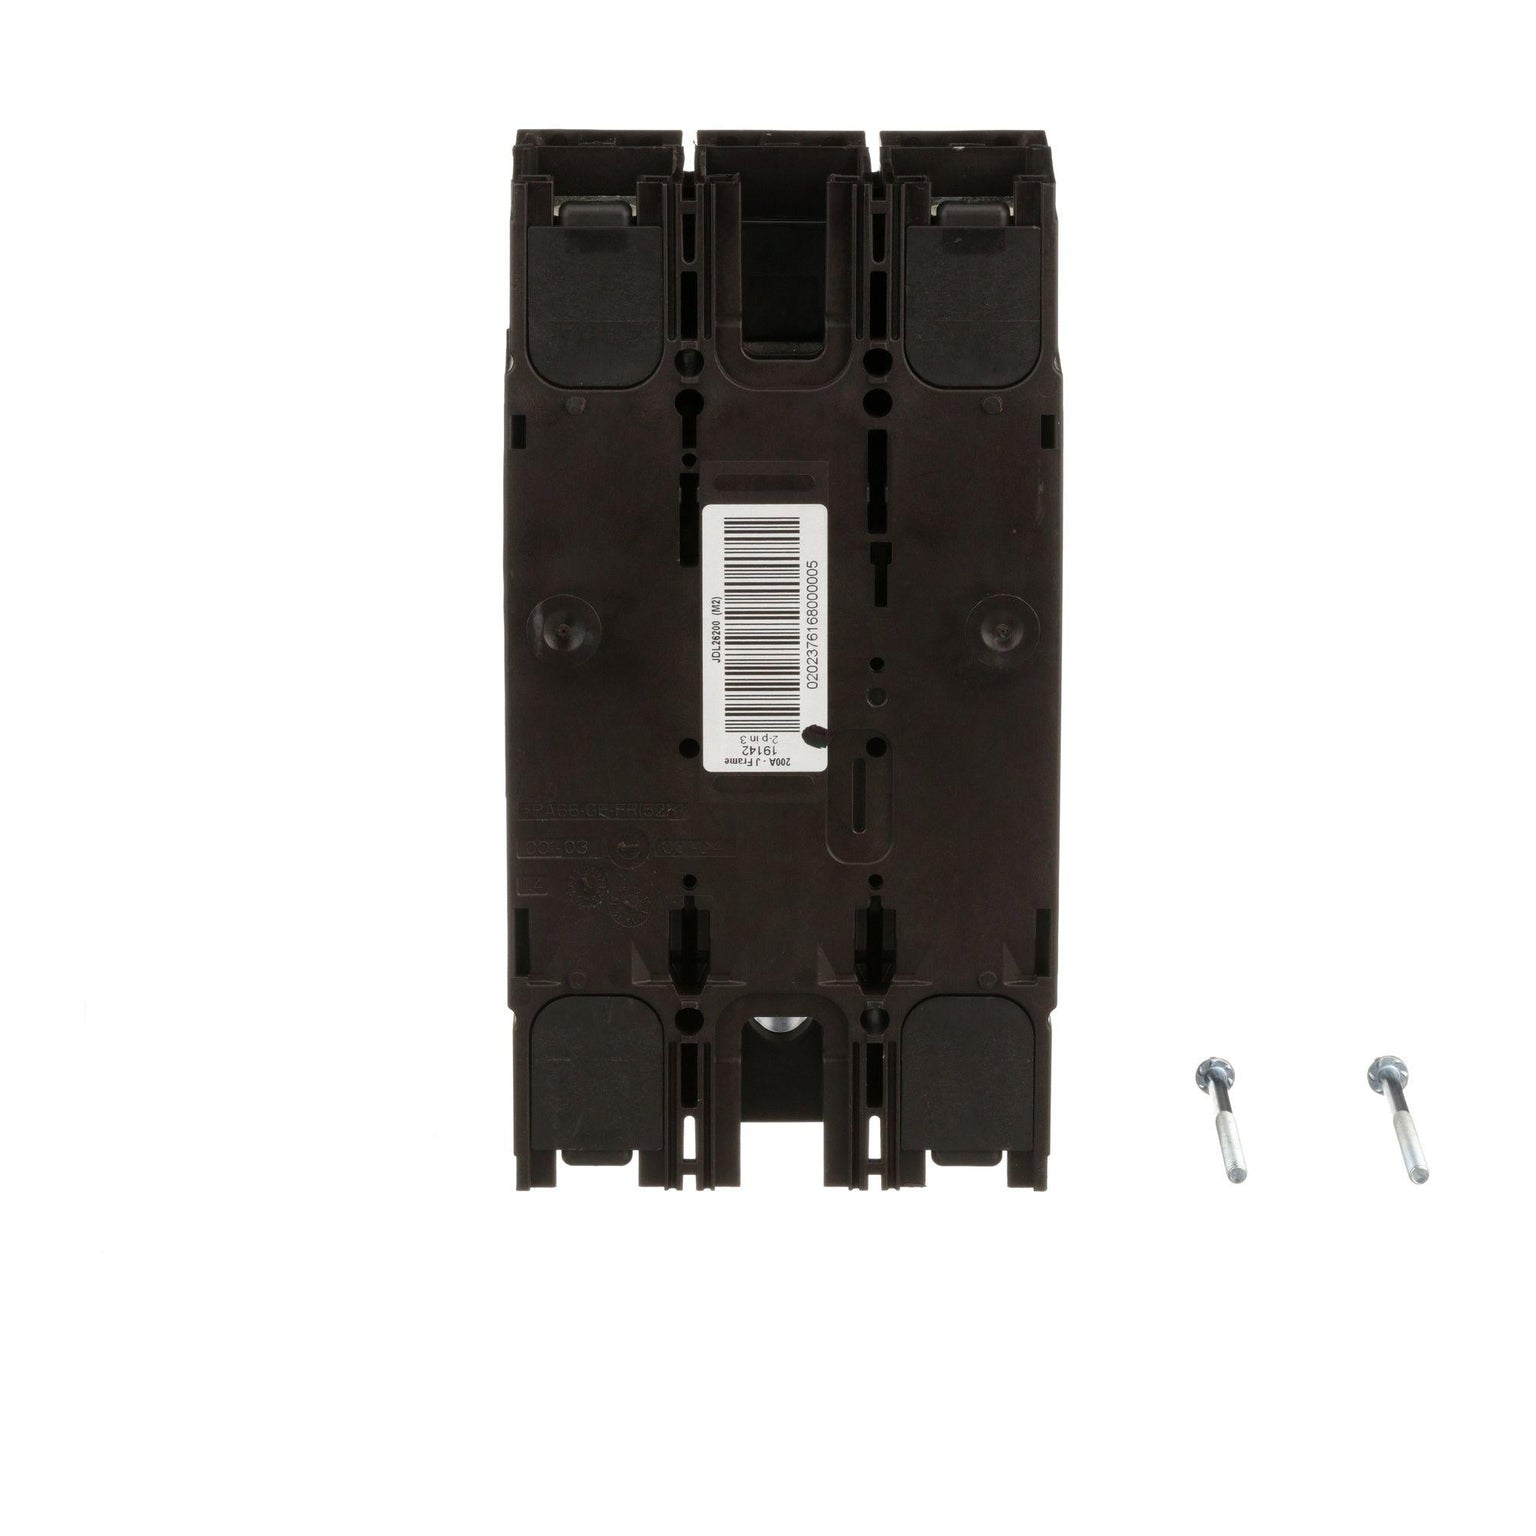 JDL36200SA - Square D - Molded Case Circuit Breakers